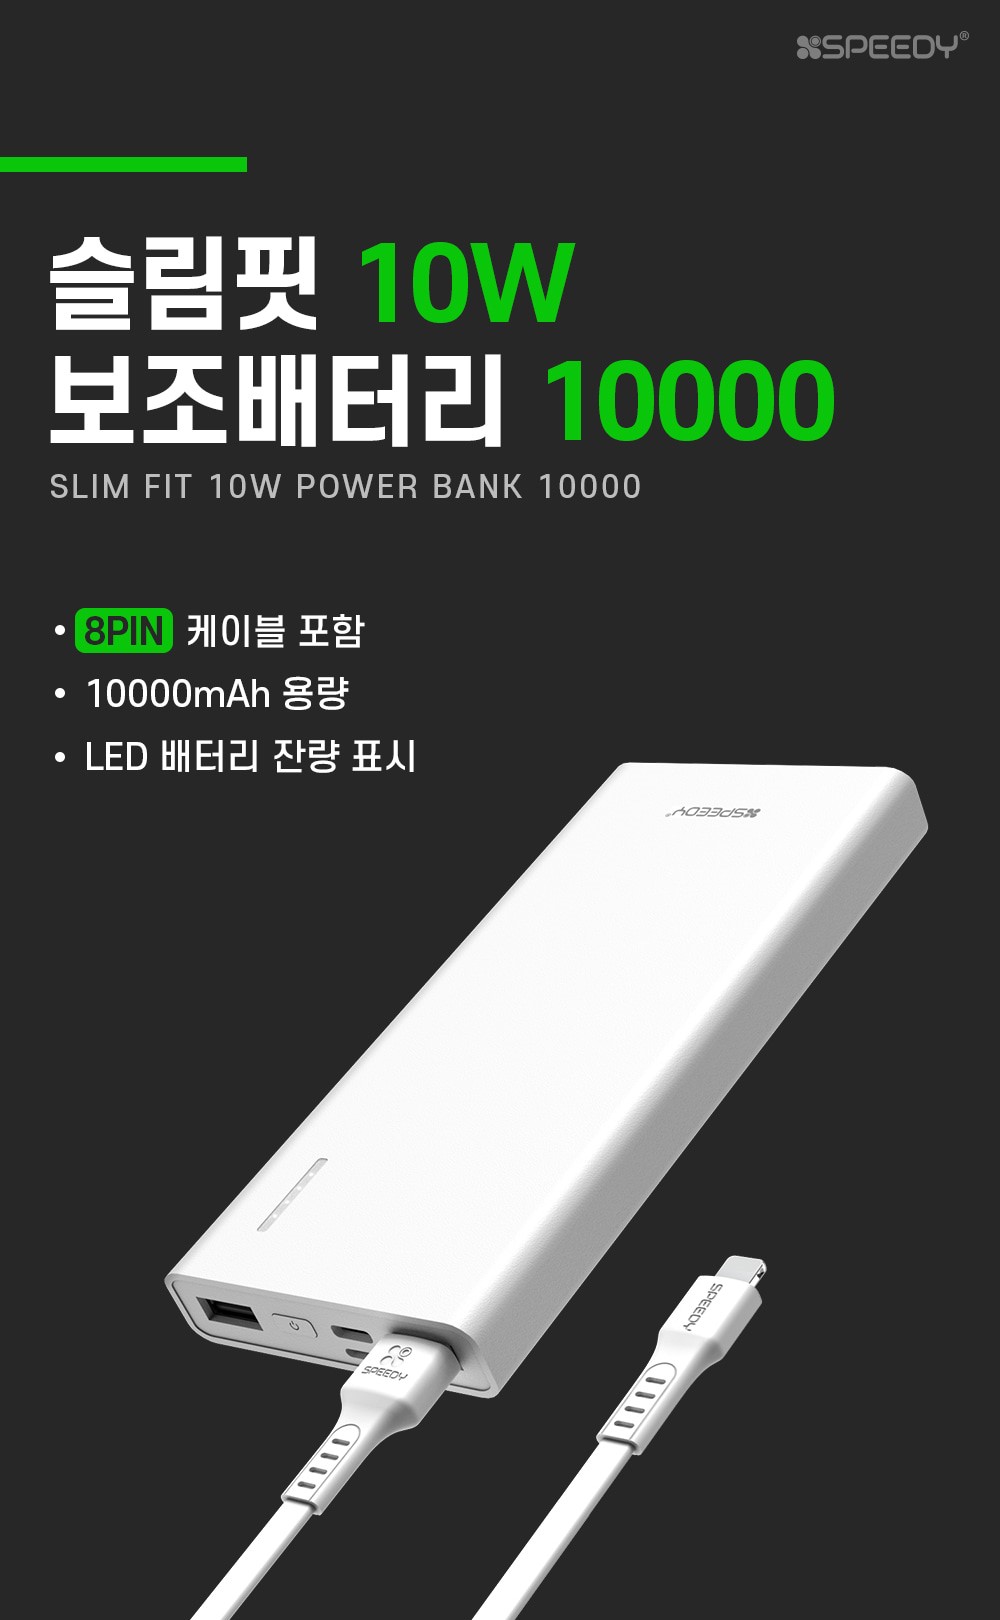 S2B] SPEEDY Slim Fit 10W Power Bank 10000 _ with Lightning